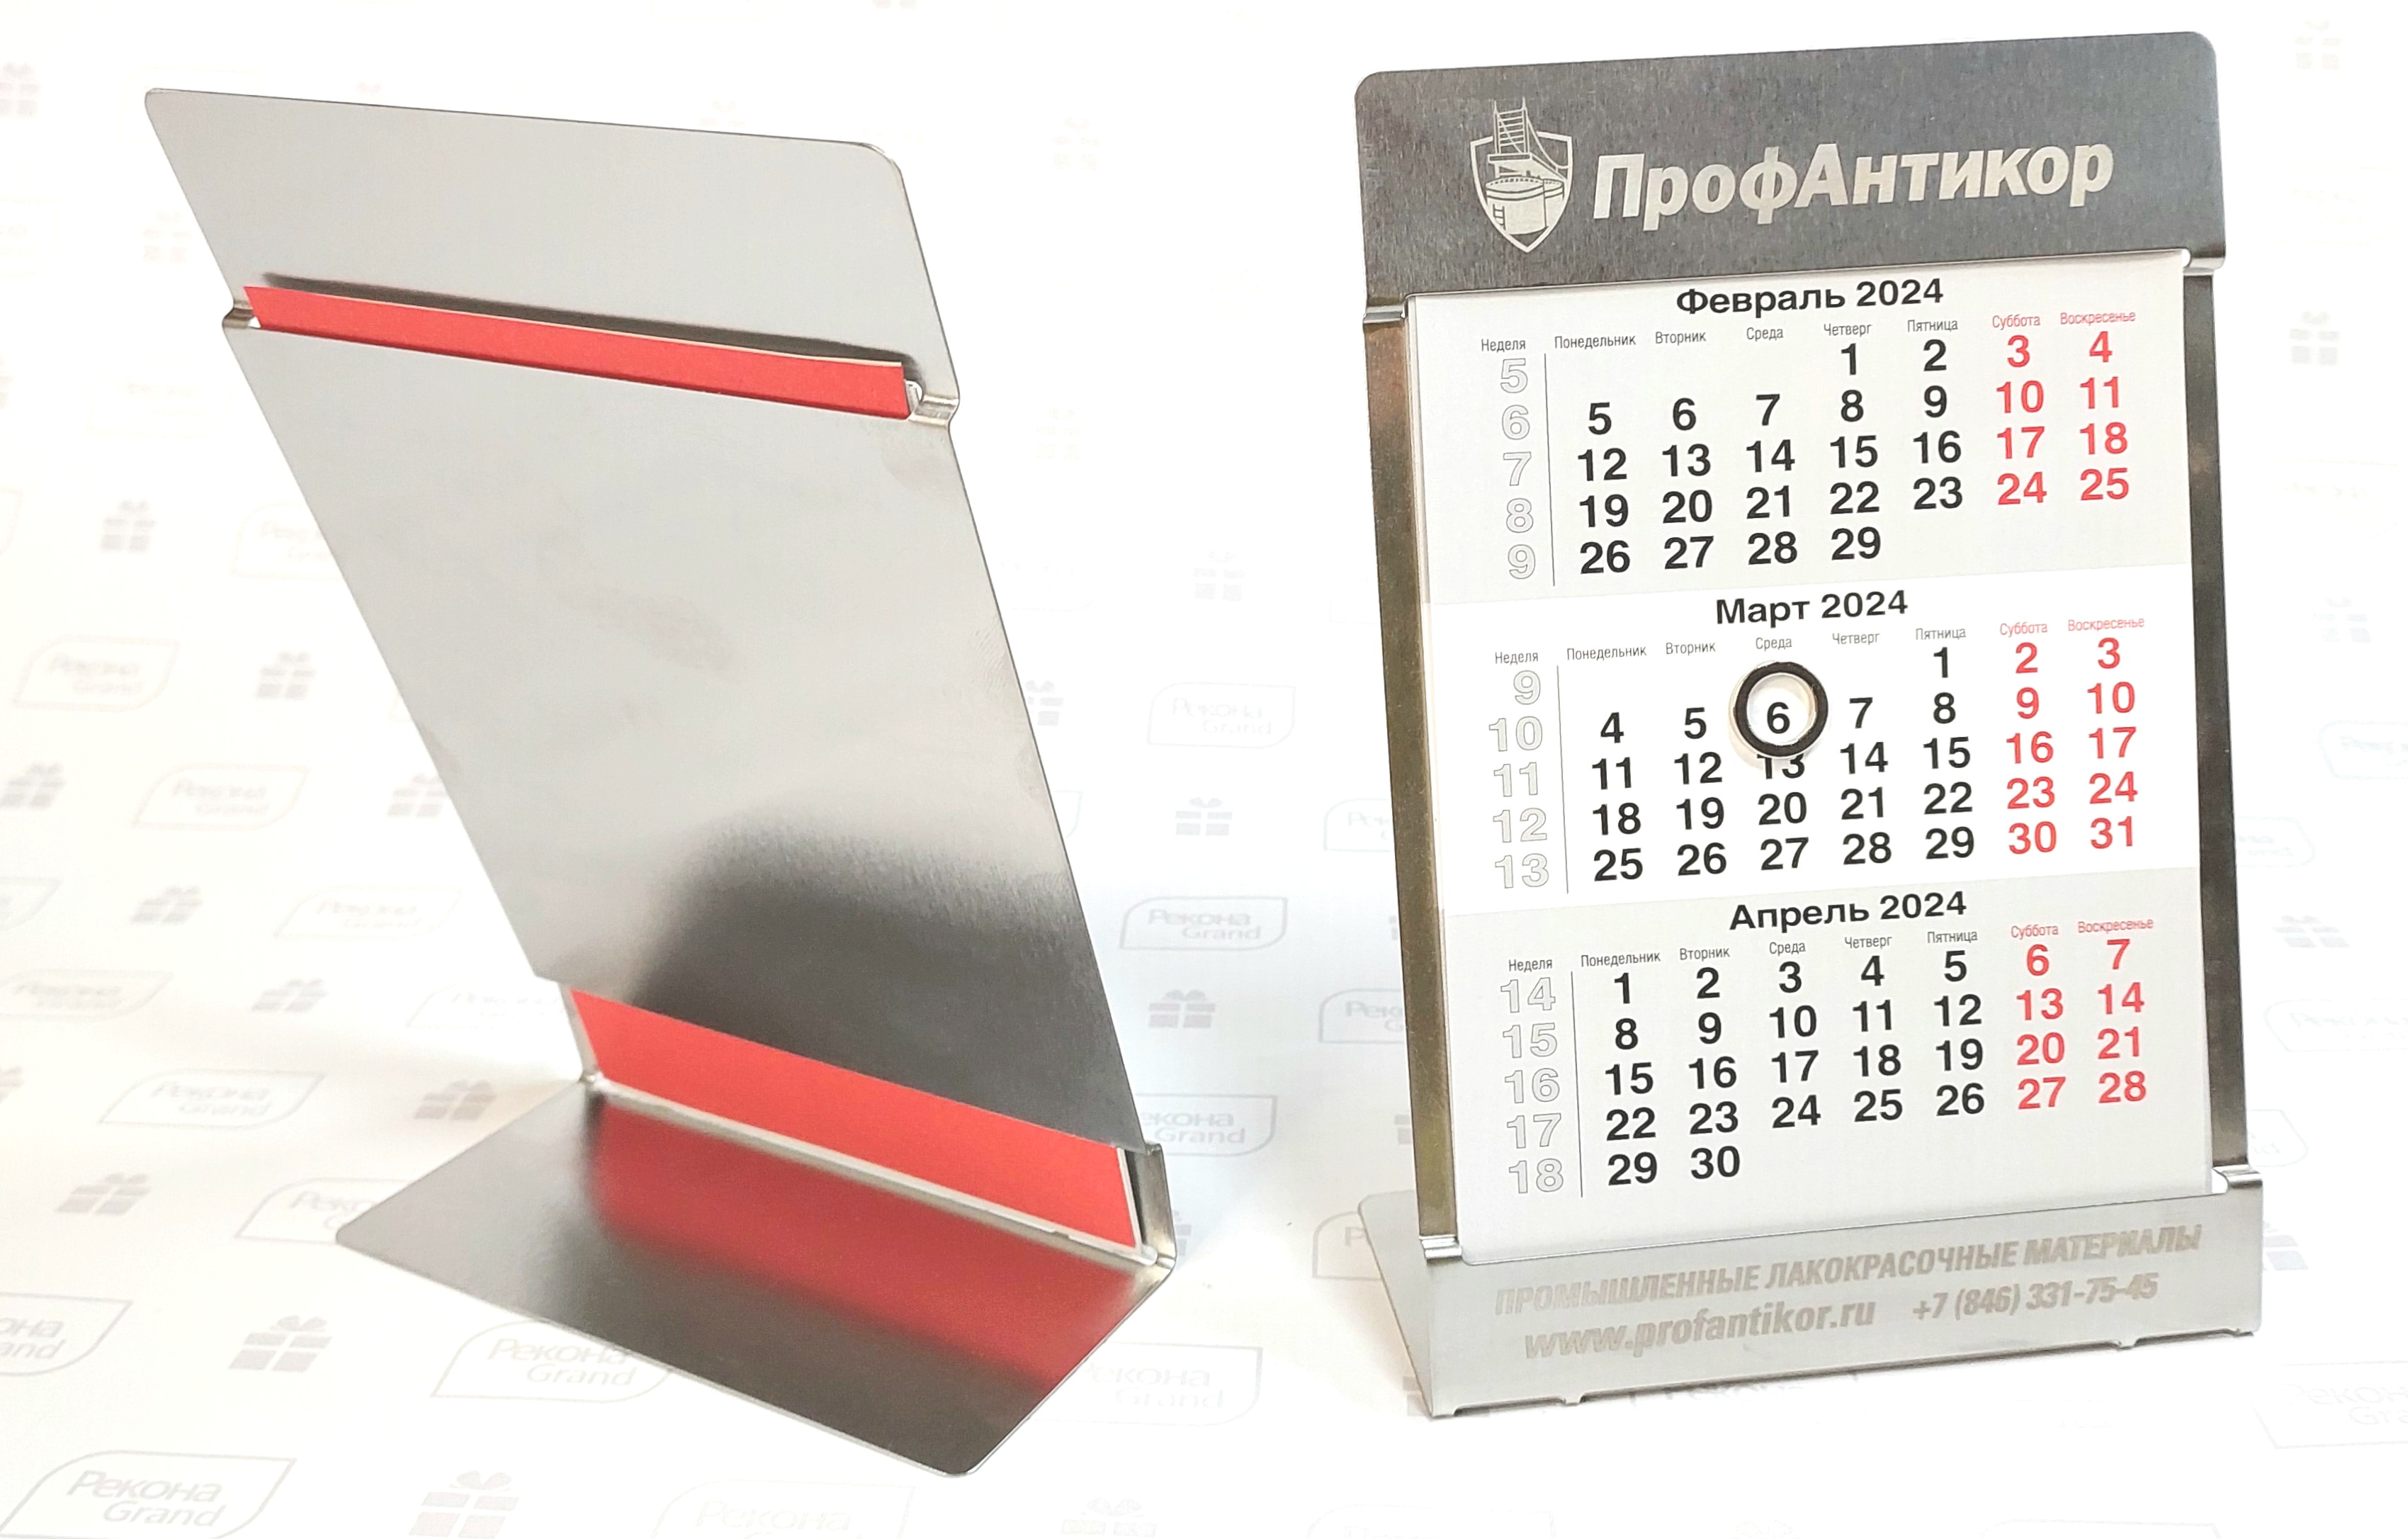 металлические календари с логотипом